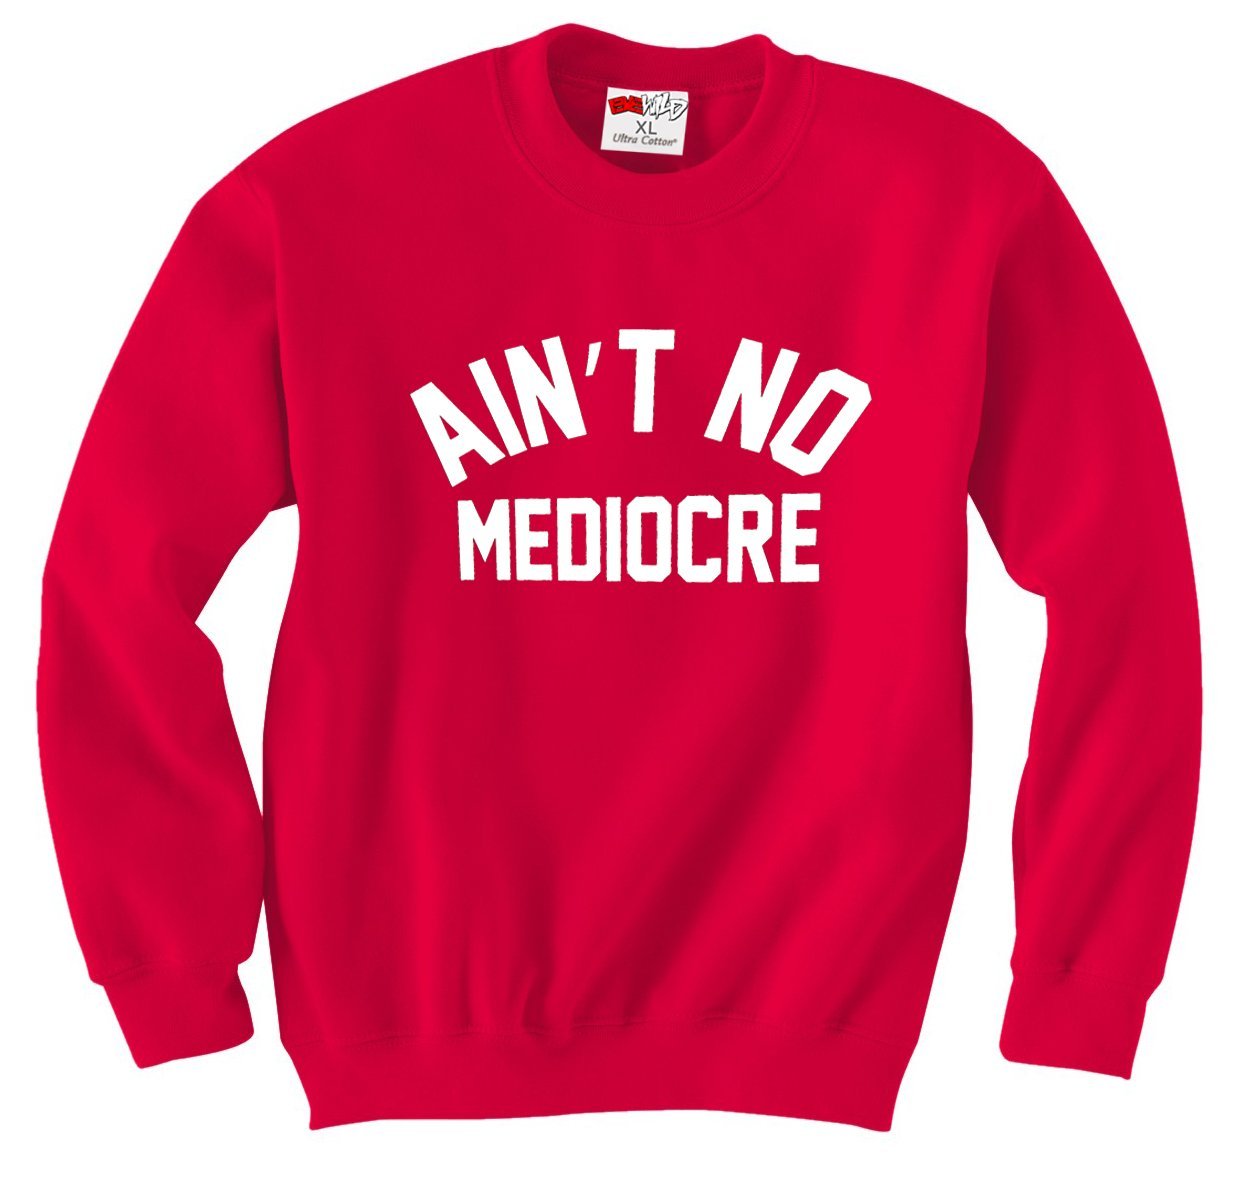 "Ain't" No Mediocre Crewneck Sweatshirt Red